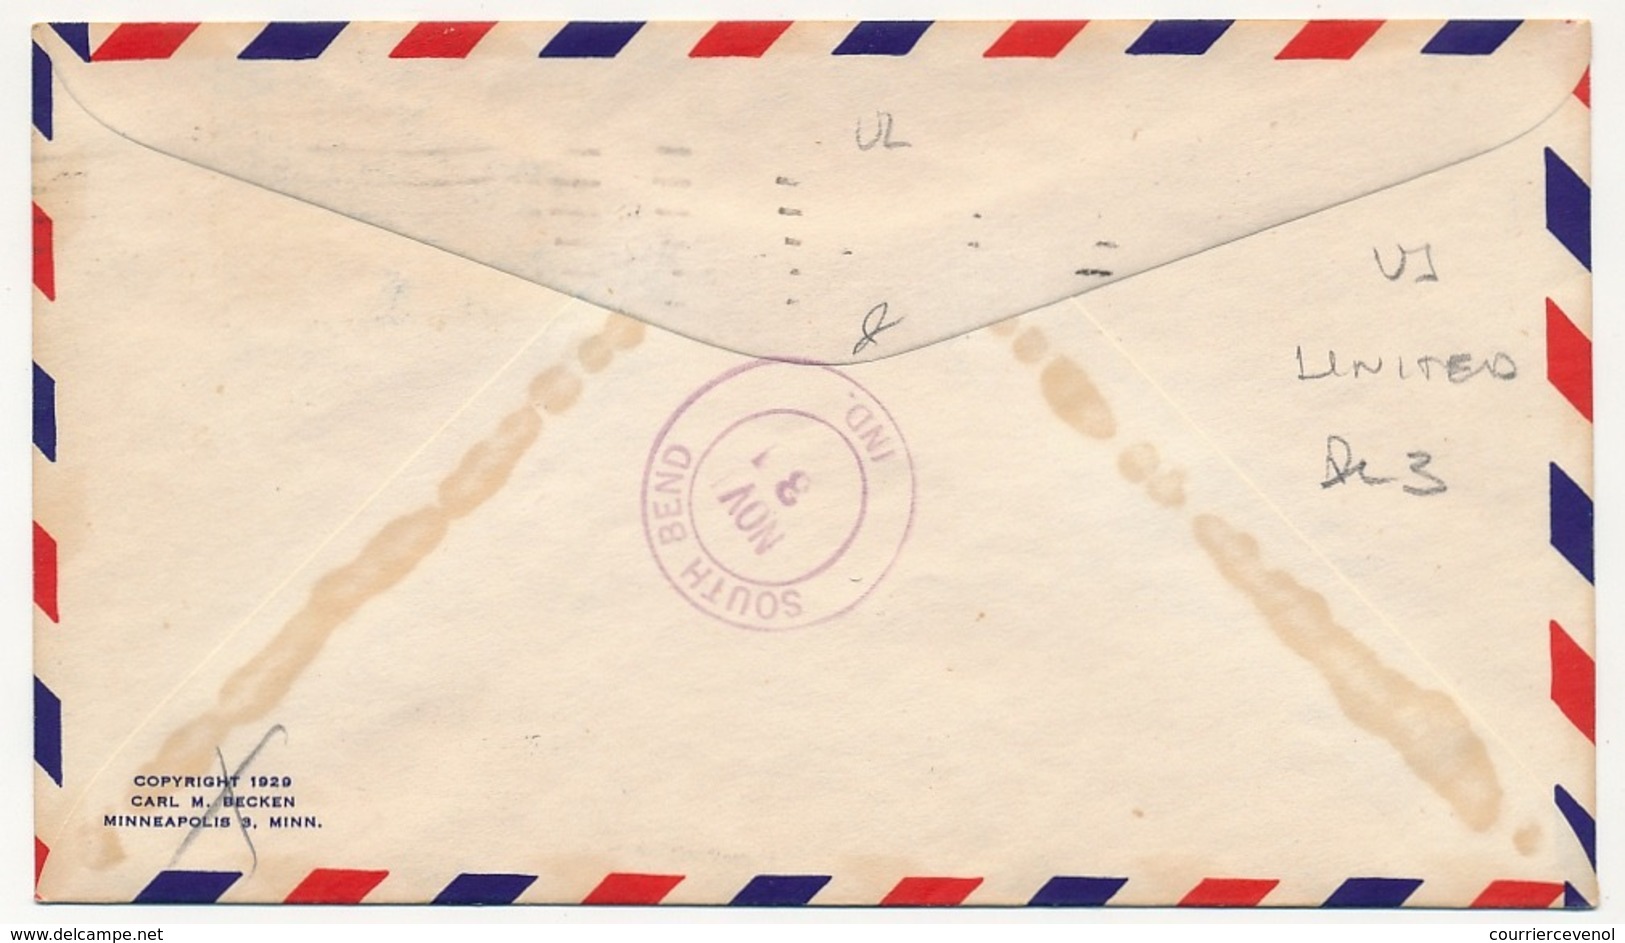 ETATS UNIS - PREMIER VOL "FORT WAYNE" Par United Air Lines - 1947 - 2c. 1941-1960 Briefe U. Dokumente